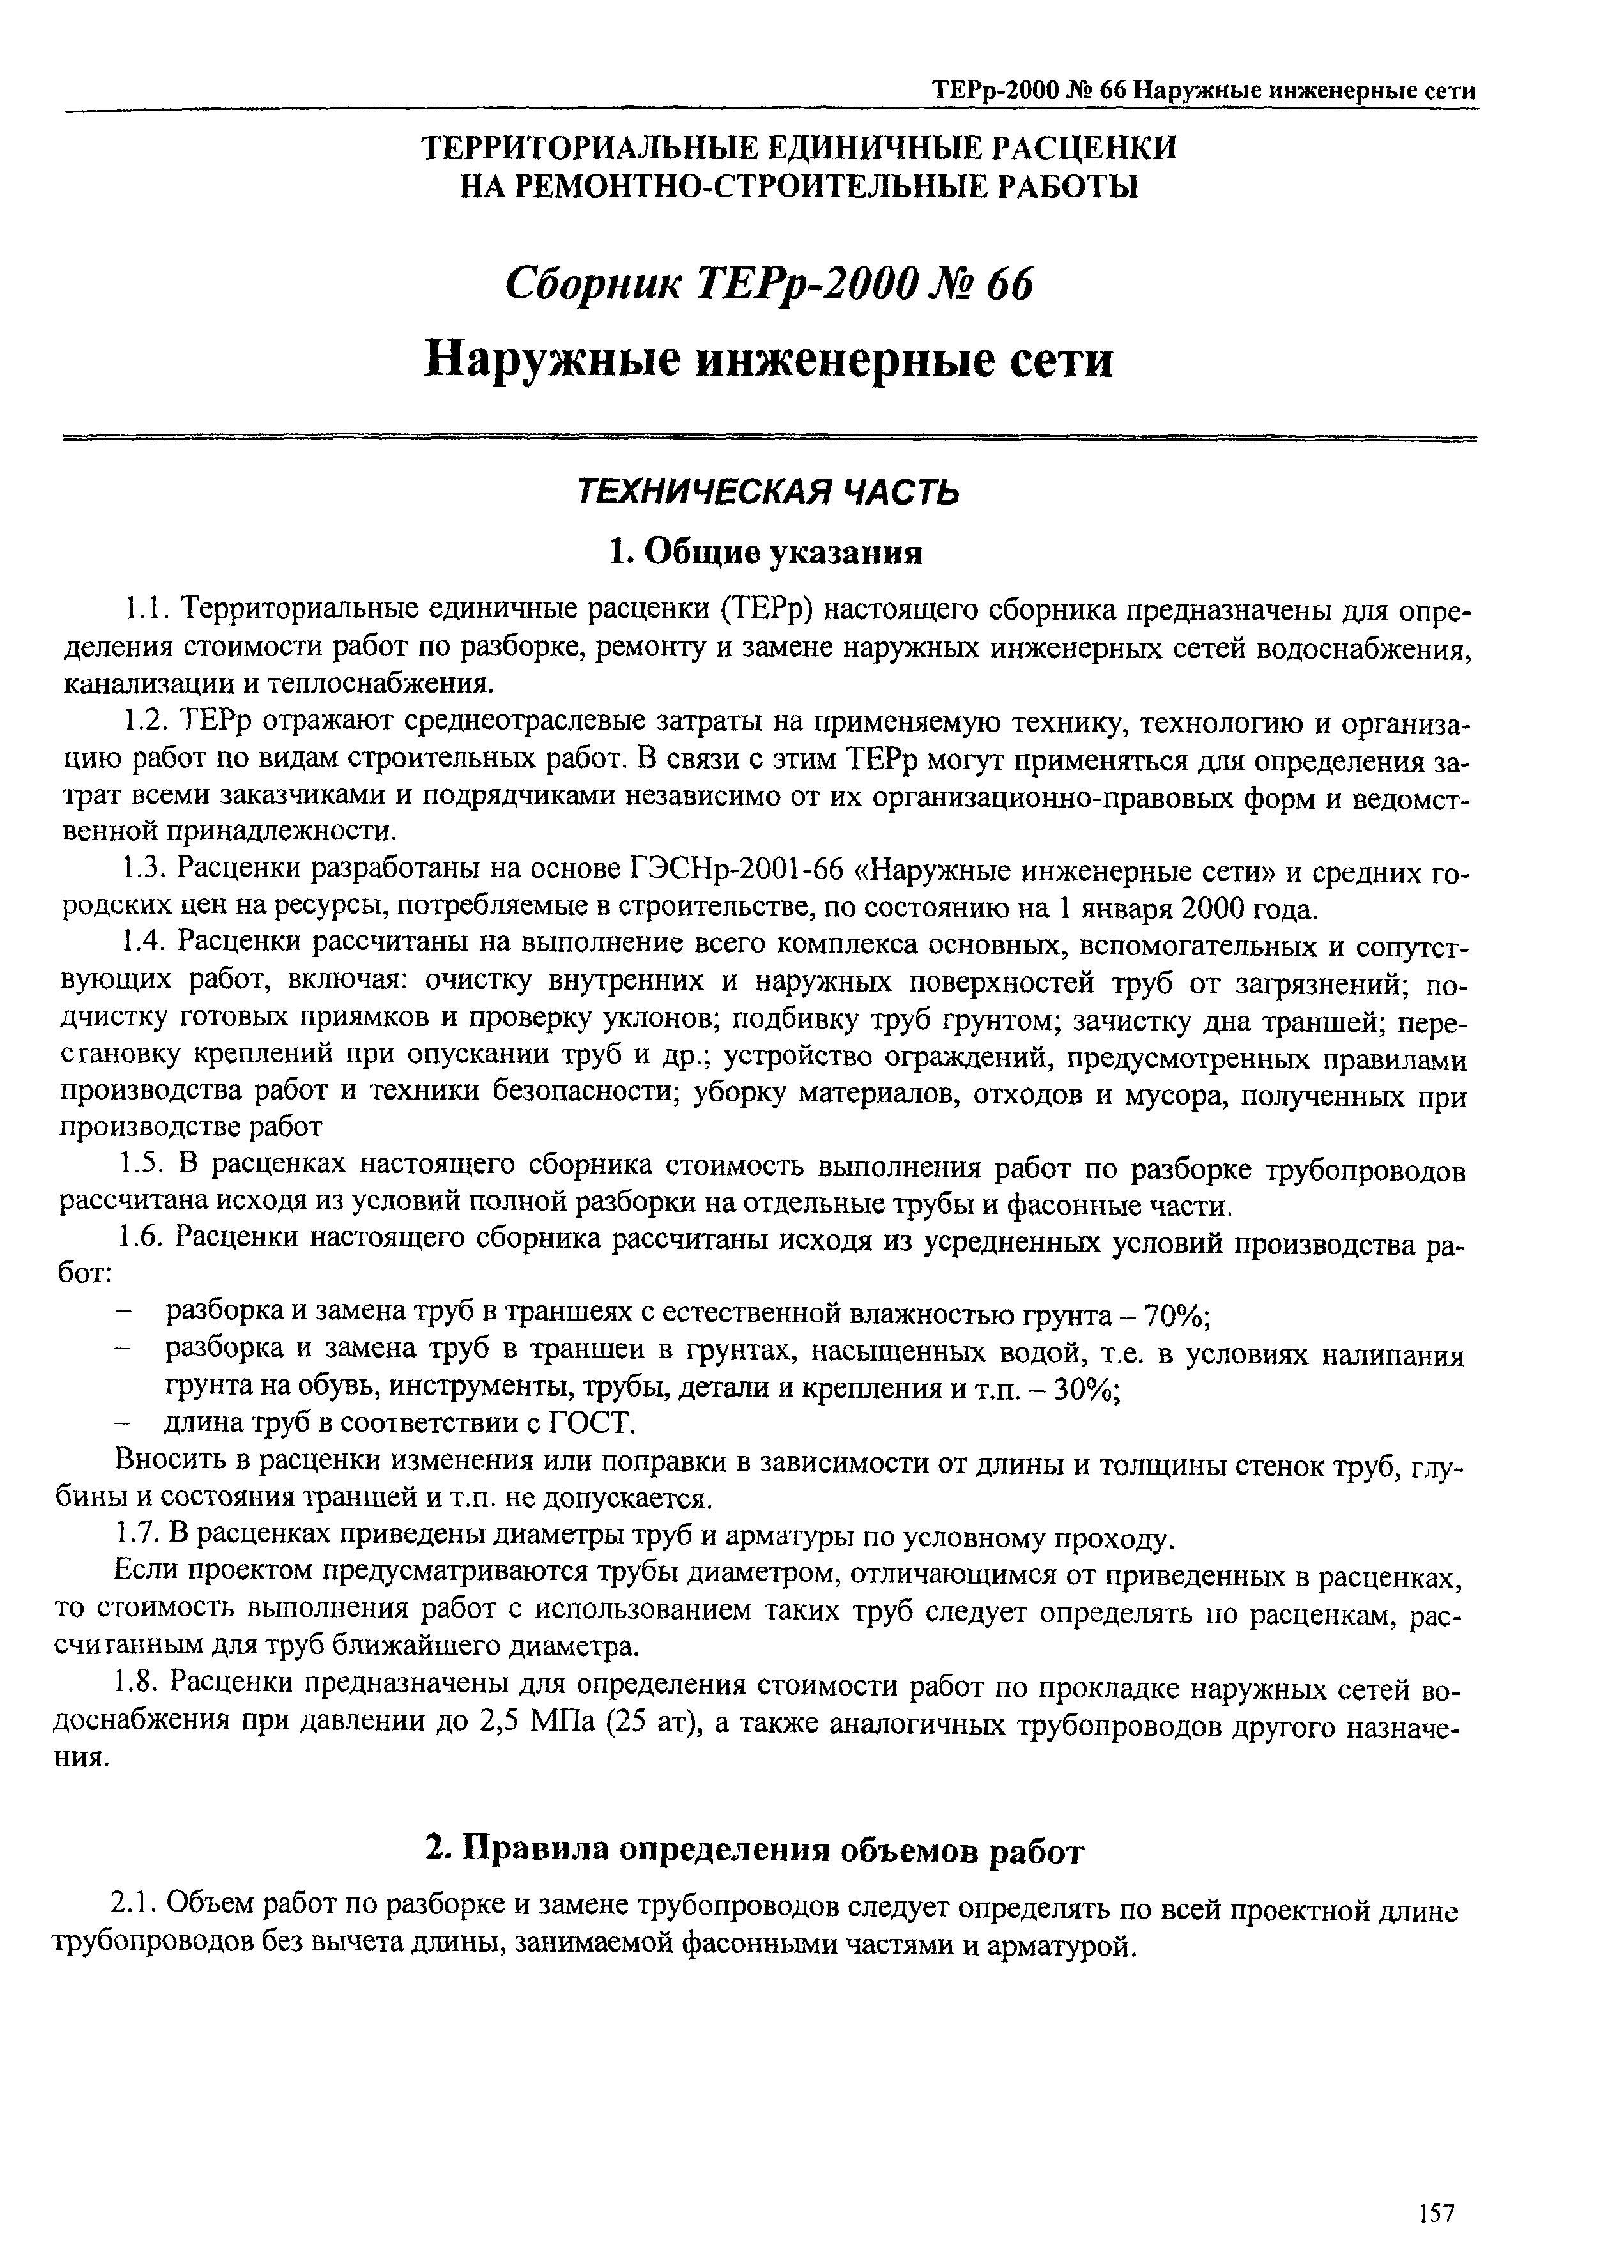 ТЕРр Омской области 2000-66